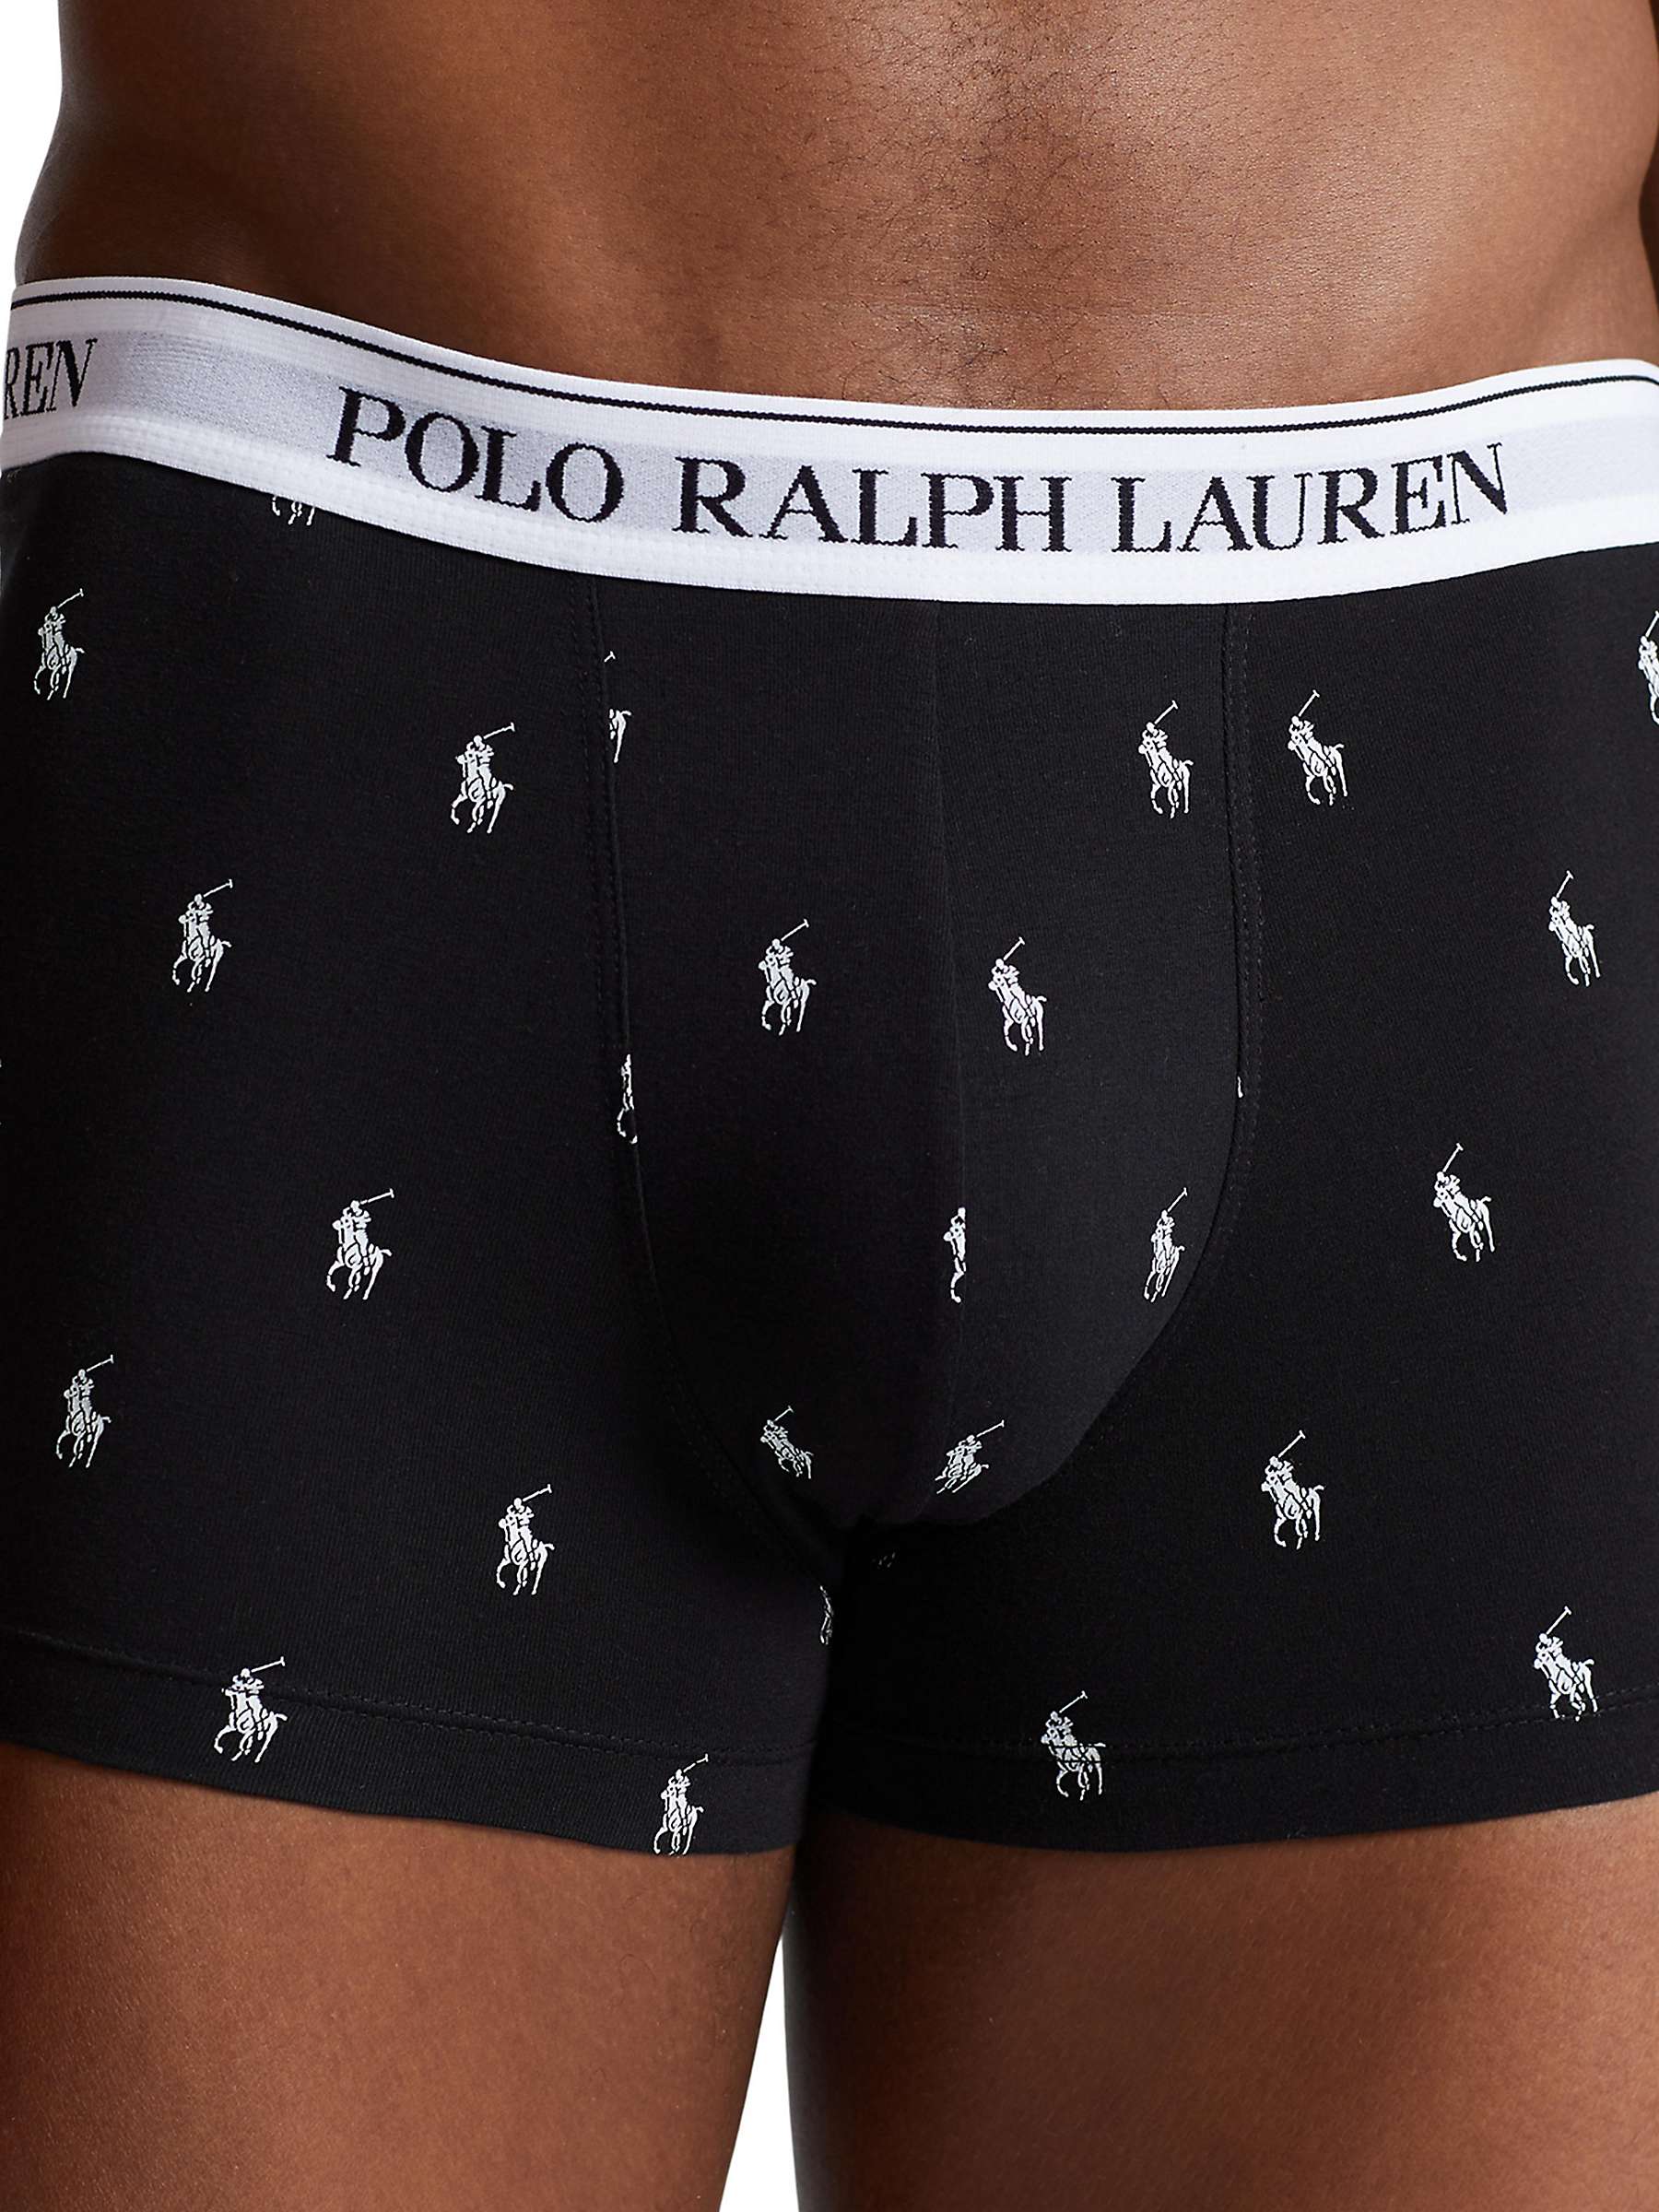 Buy Polo Ralph Lauren Plain Logo Cotton Stretch Trunks, Pack of 5, Mono Online at johnlewis.com